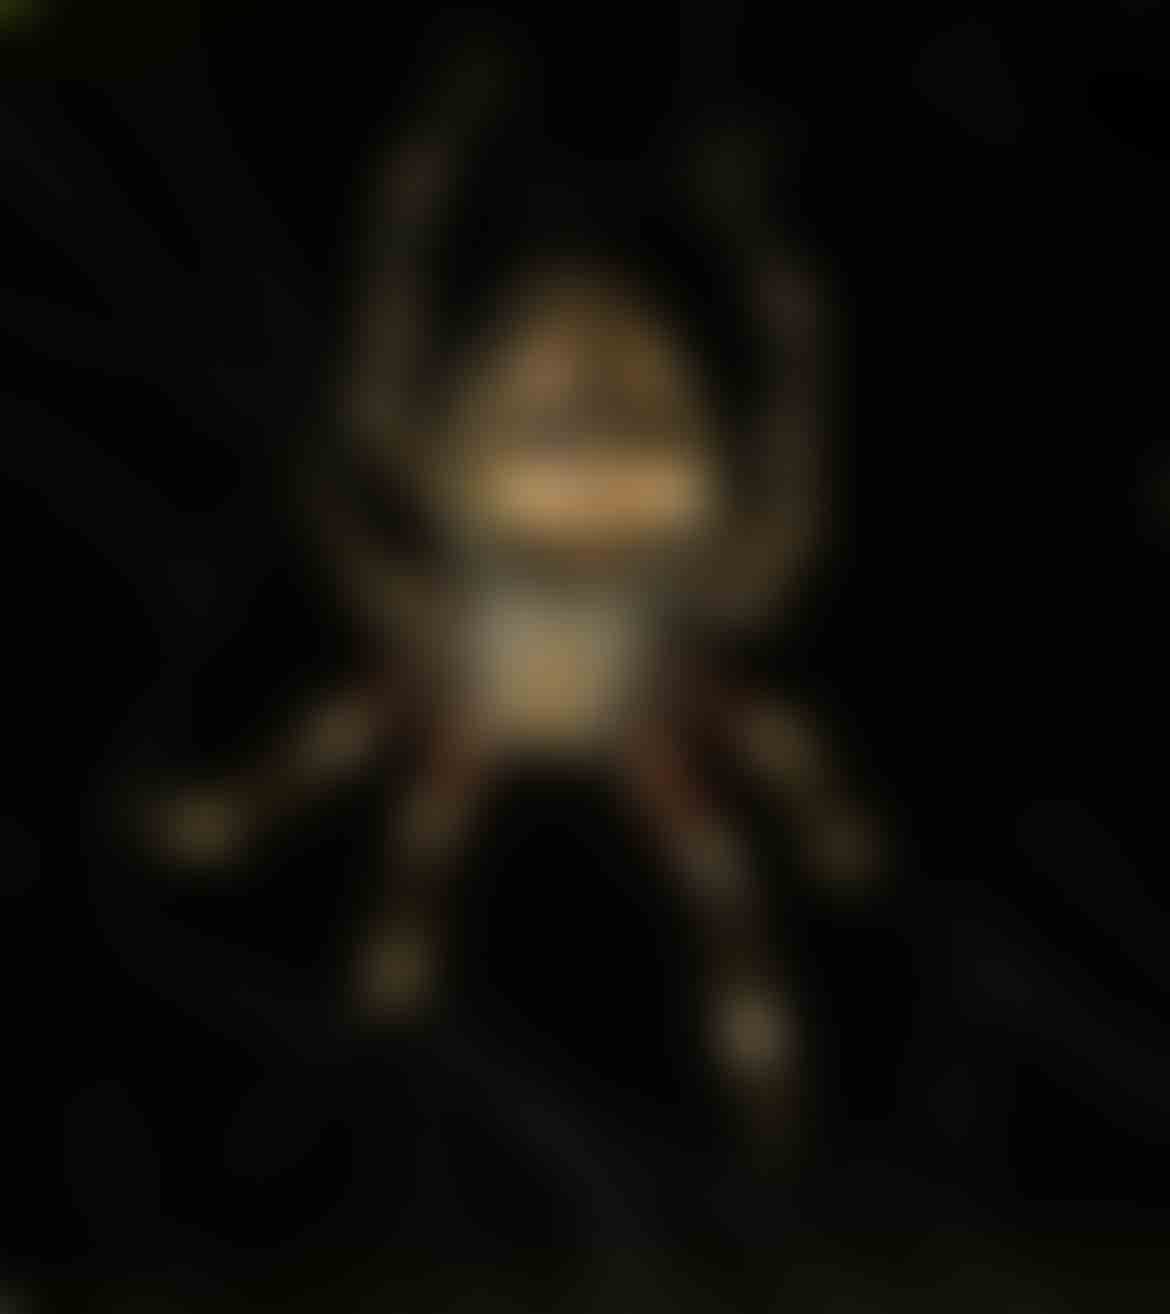 Spider from Tambopata, Peru